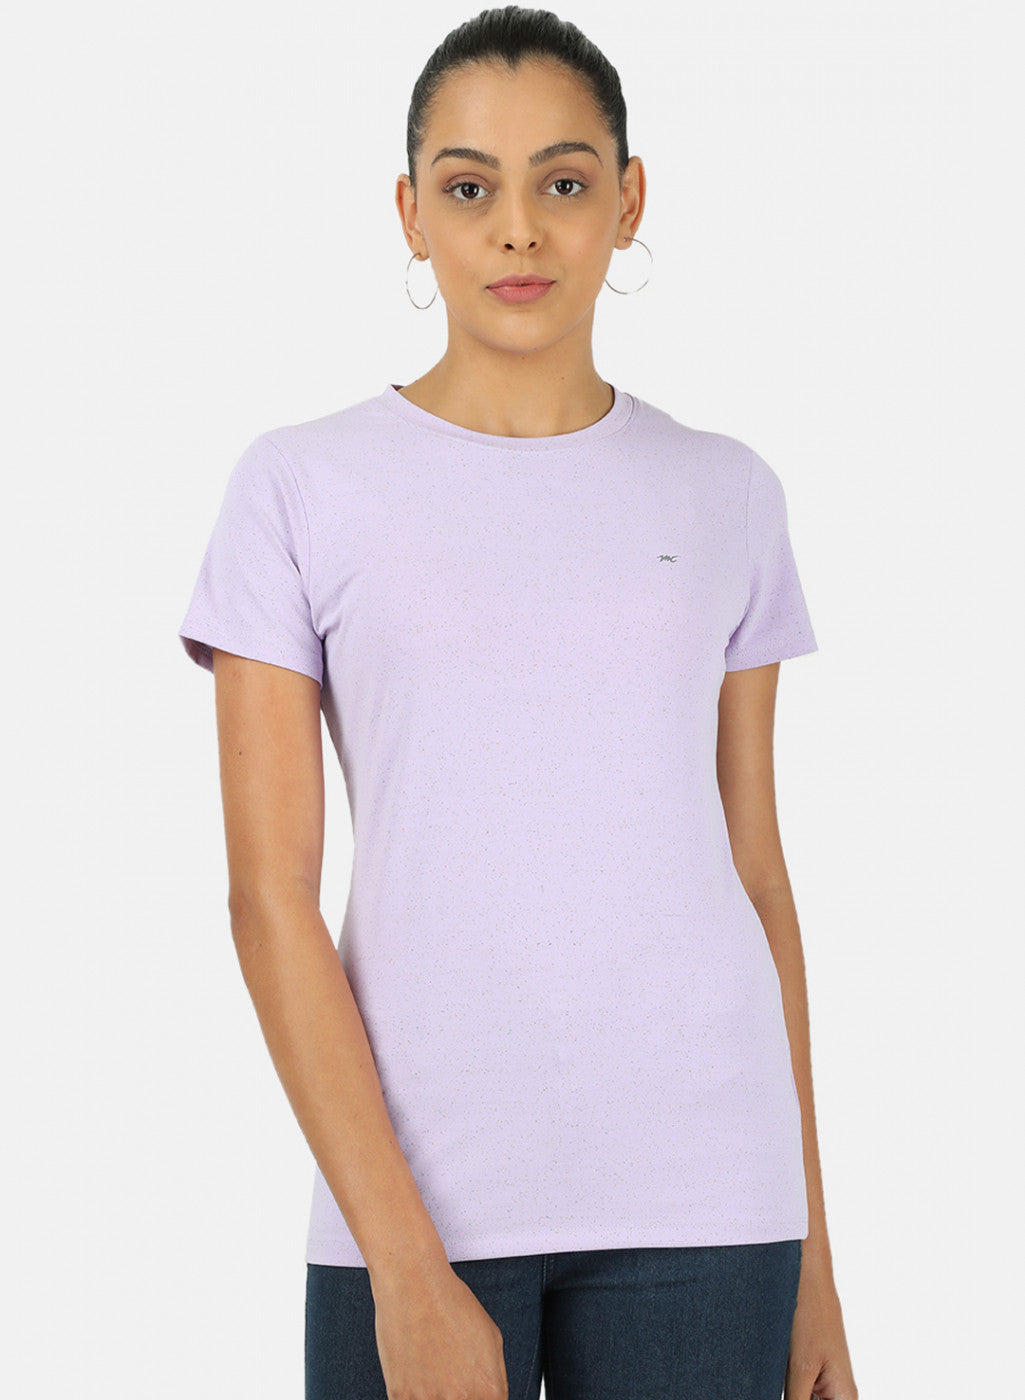 Womens Purple Plain Top